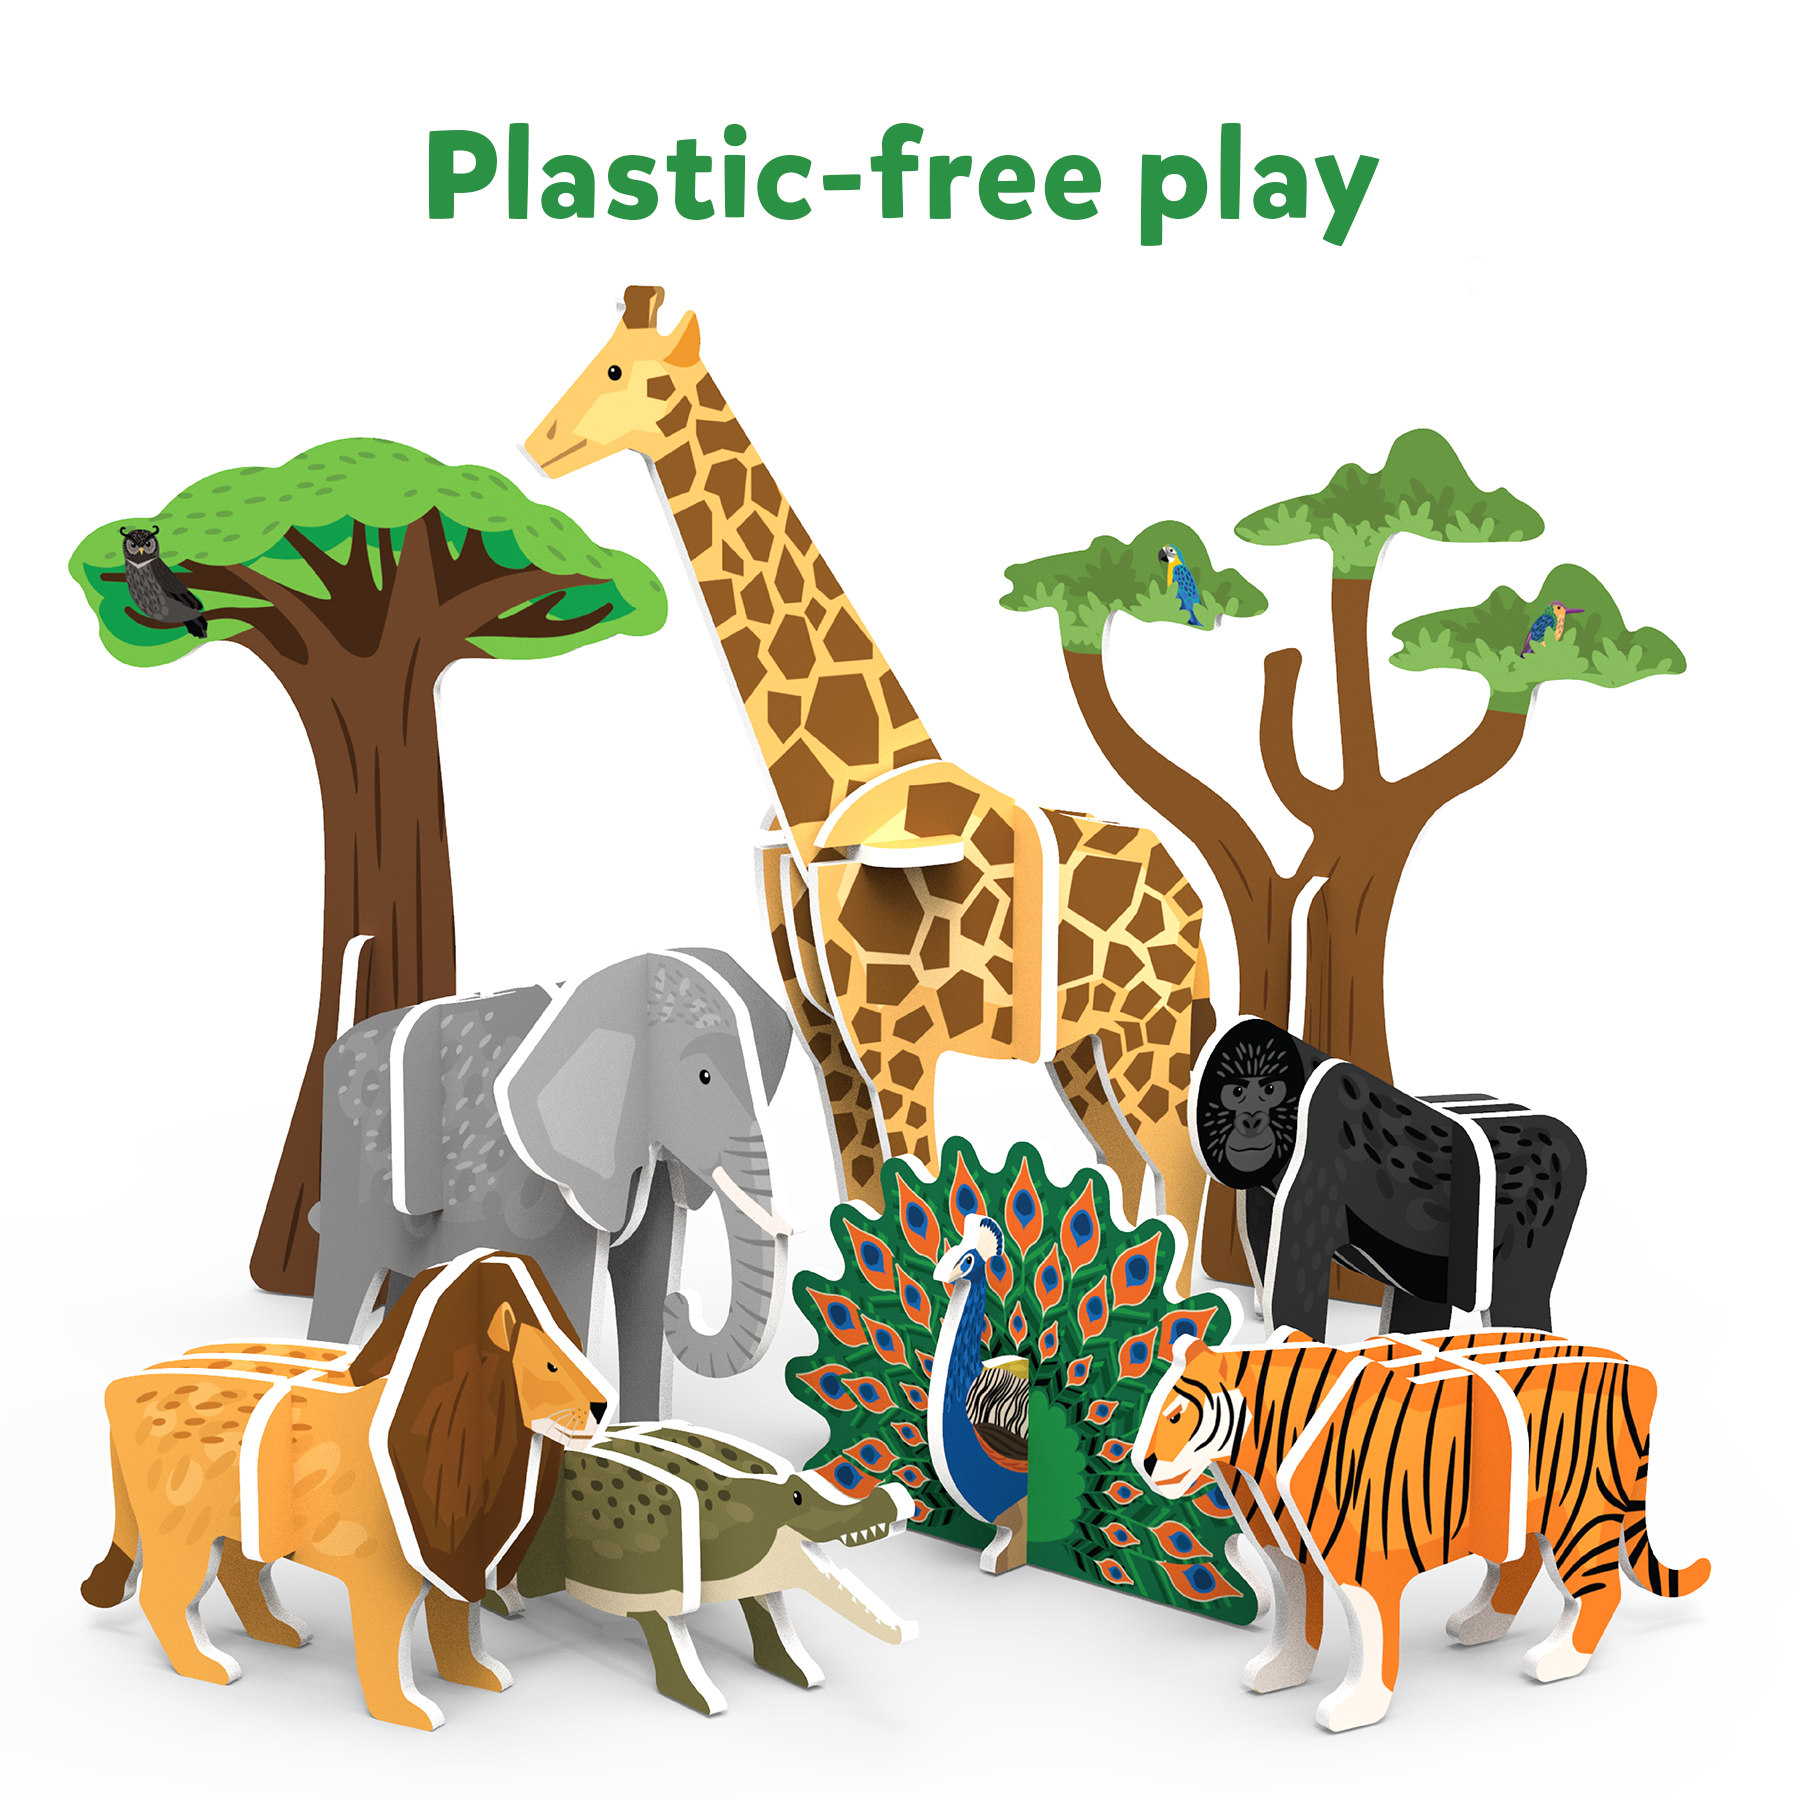 My World : Amazing Animals - Building Toy & Plastic Free Playset